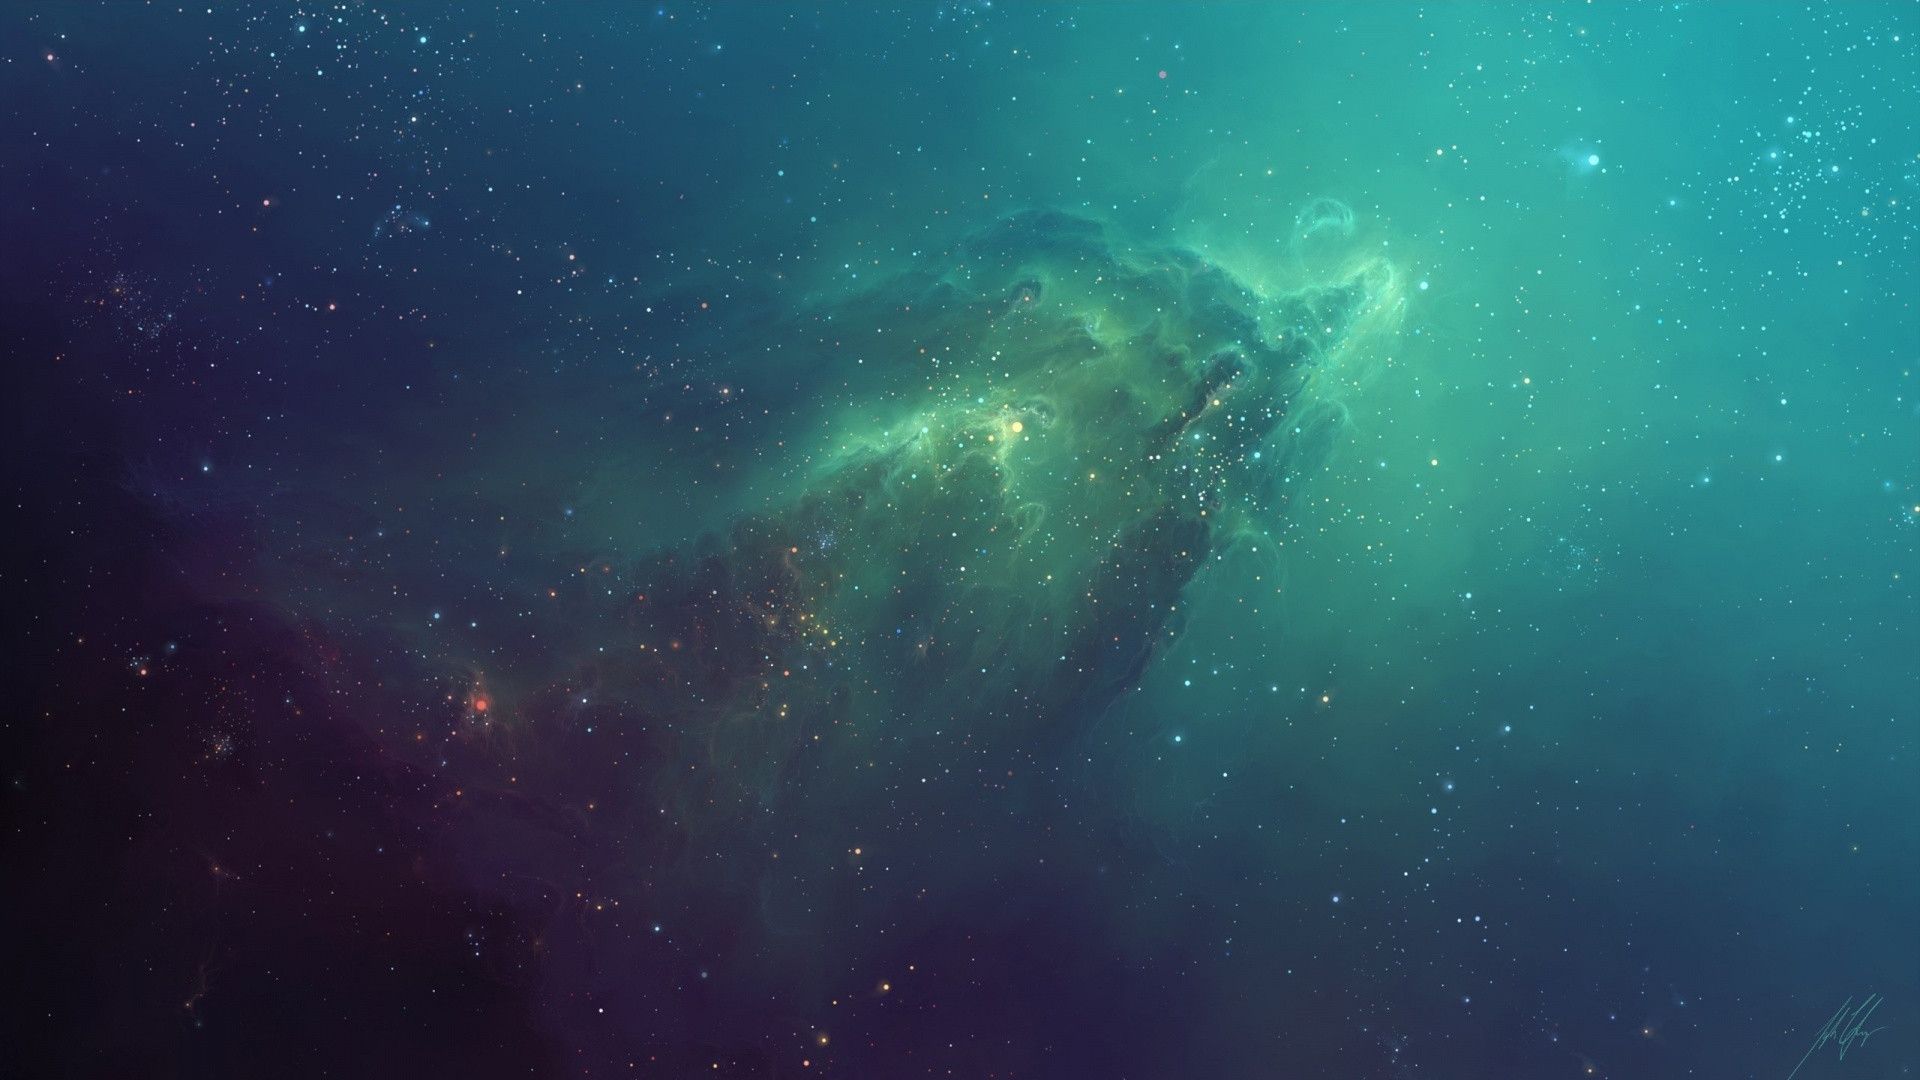 Anyone else a fan of the iOS 7 Nebula wallpaper I created a full